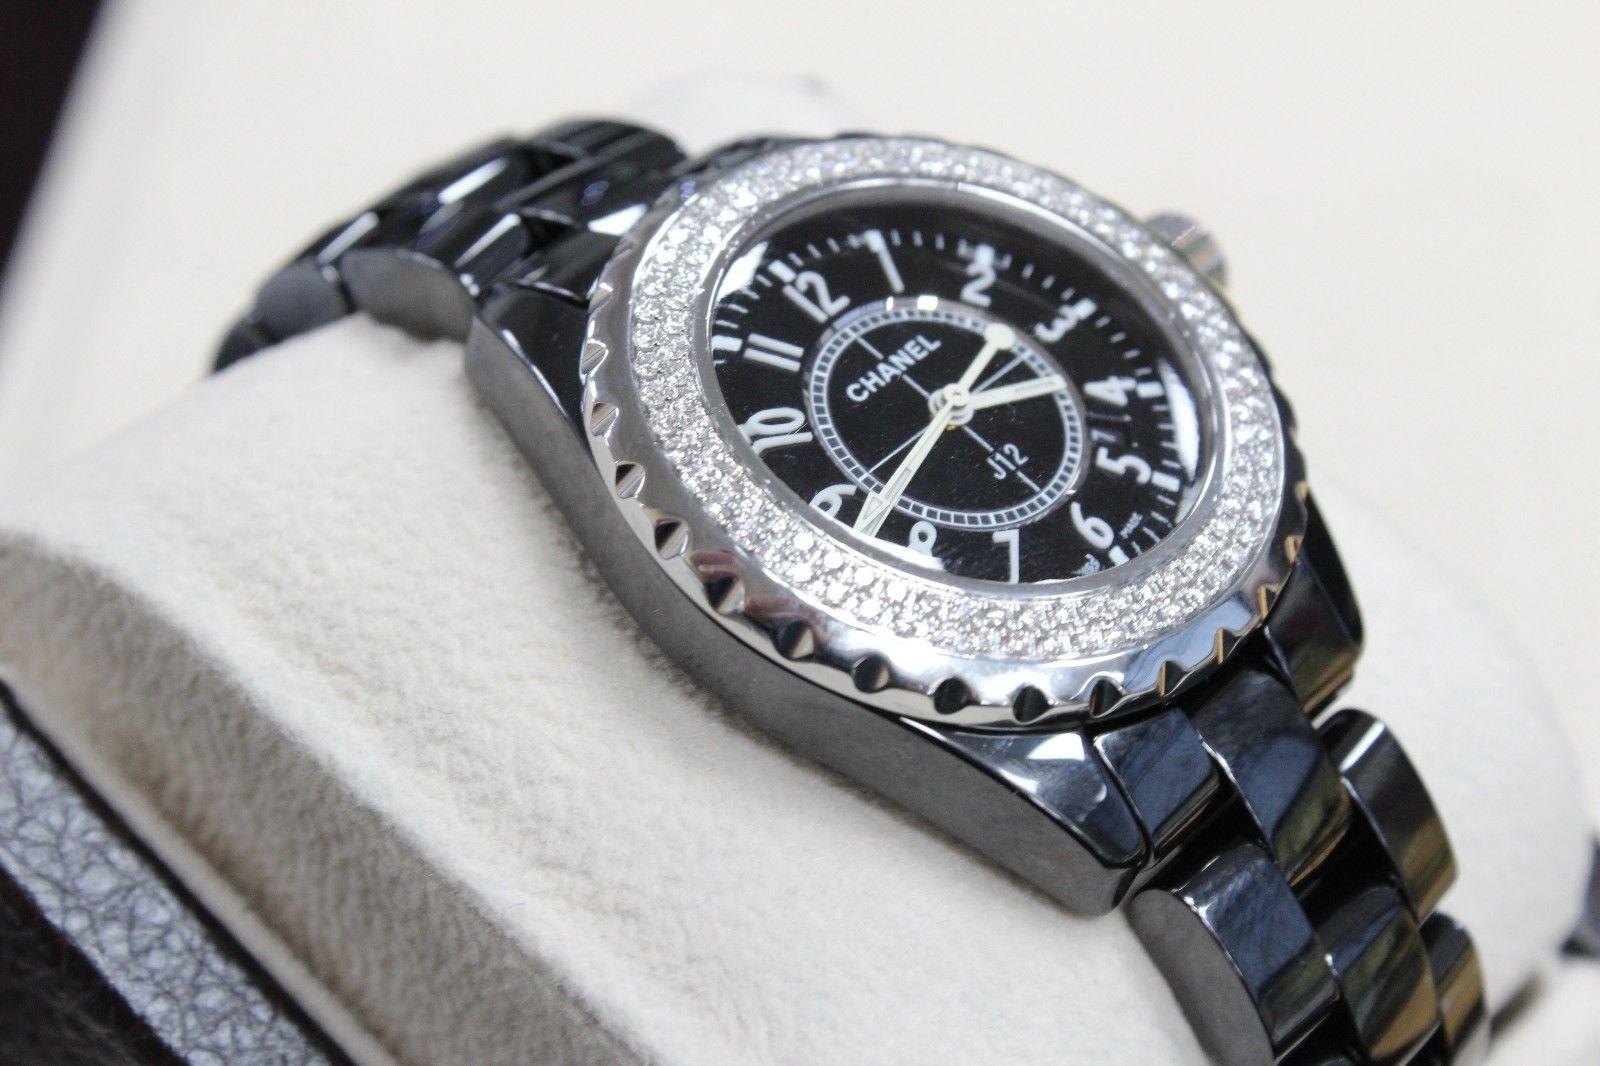 Chanel 

Style Number: H0949 

Model: J12

Case: Black Ceramic

Band: Black Ceramic 

Bezel: Original Diamond Bezel 

Dial: Black

Face: Sapphire Crystal 

Case Size: 33mm

Includes: 

-Elegant Watch Box

-Certified Appraisal 

-6 Month Warranty